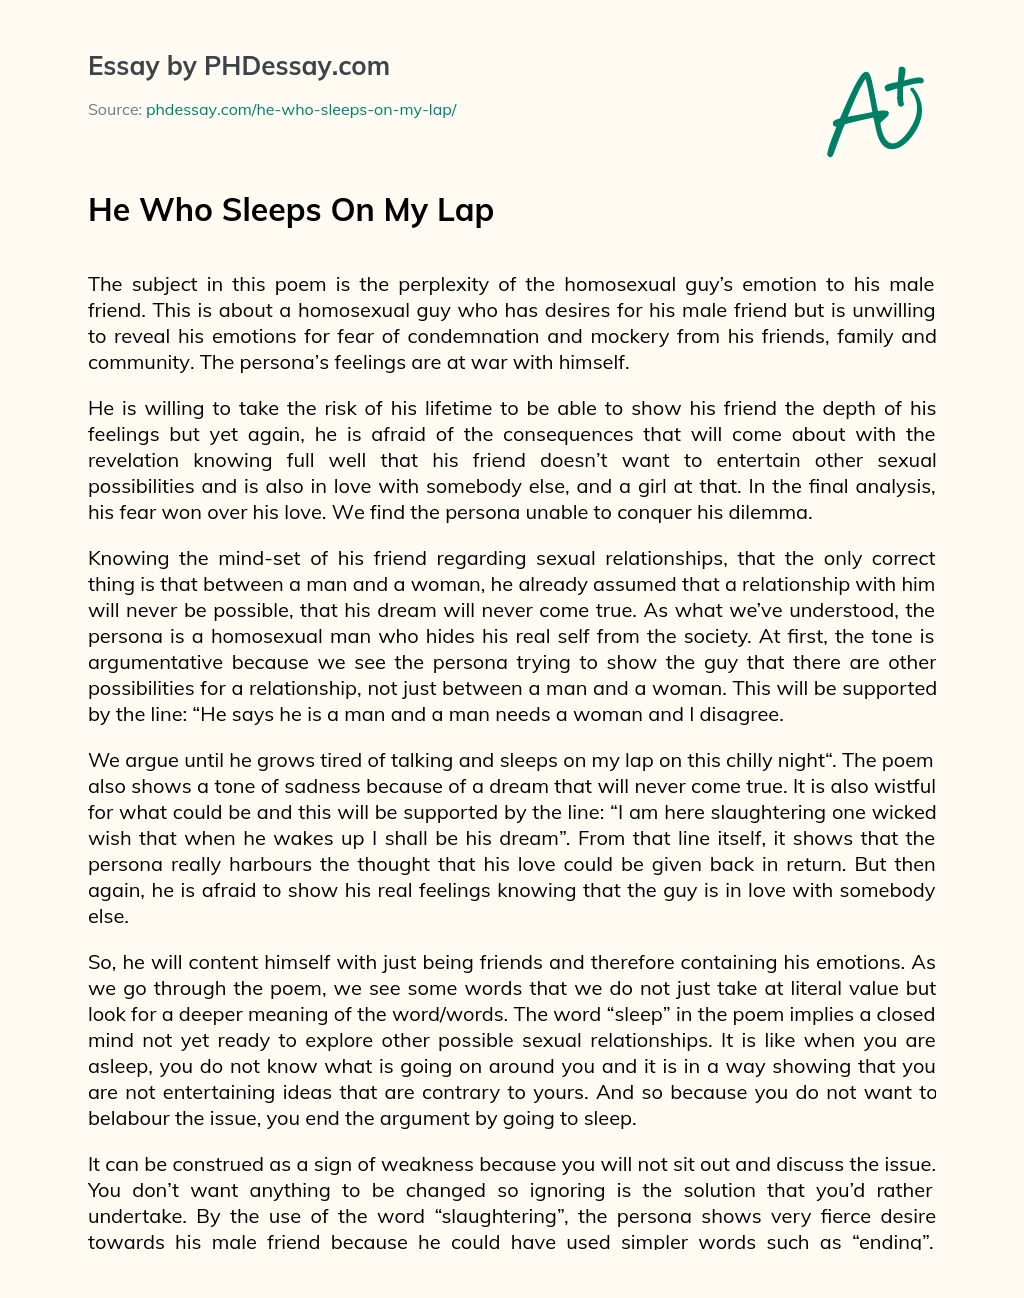 He Who Sleeps On My Lap essay